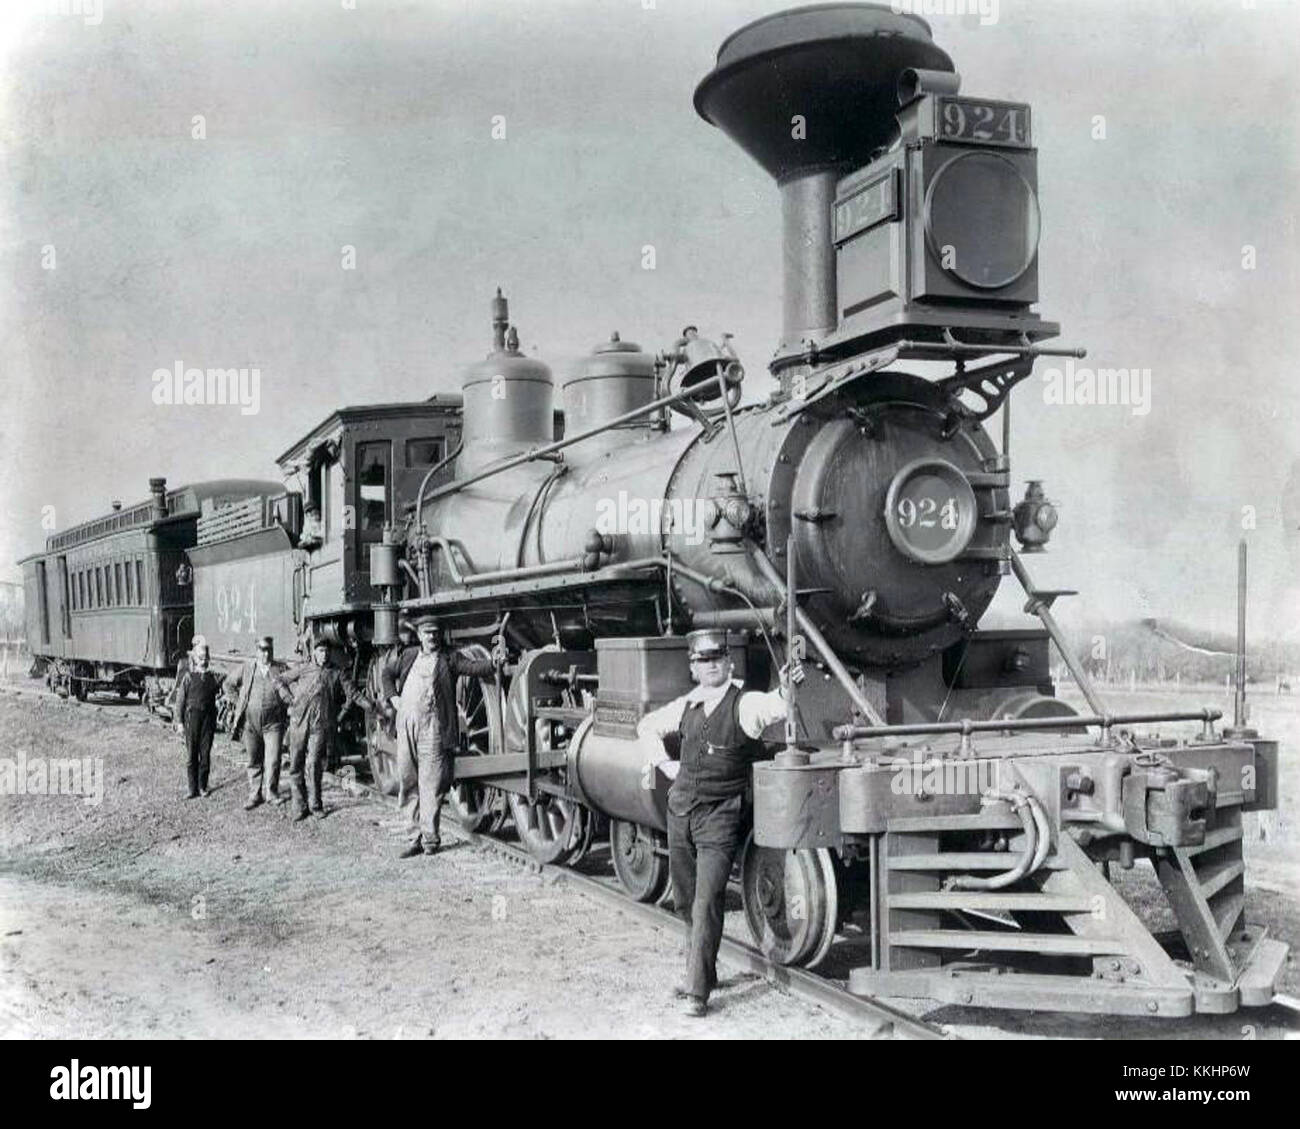 Union Pacific steam locomotive 924 Stock Photo